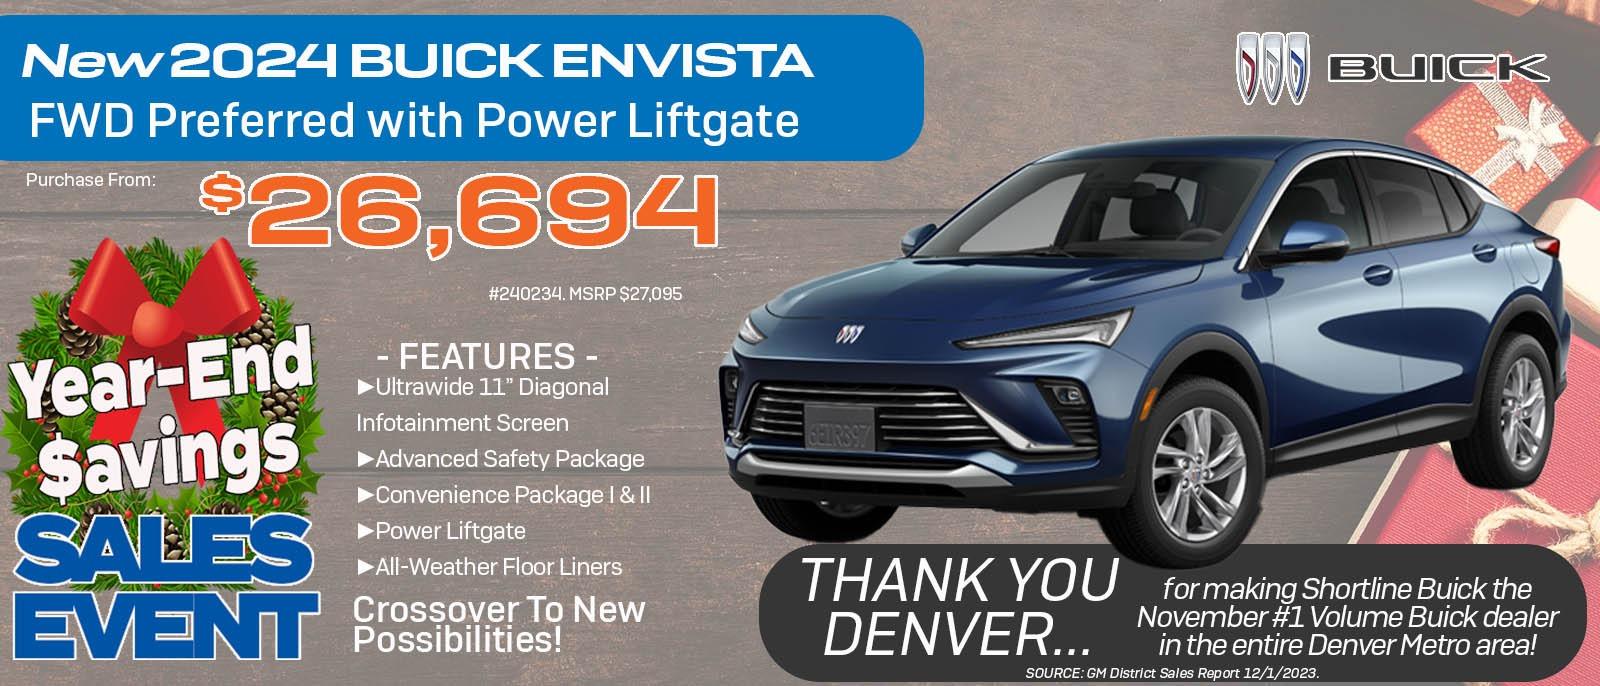 View Buick Envista Special in Denver at Shortline